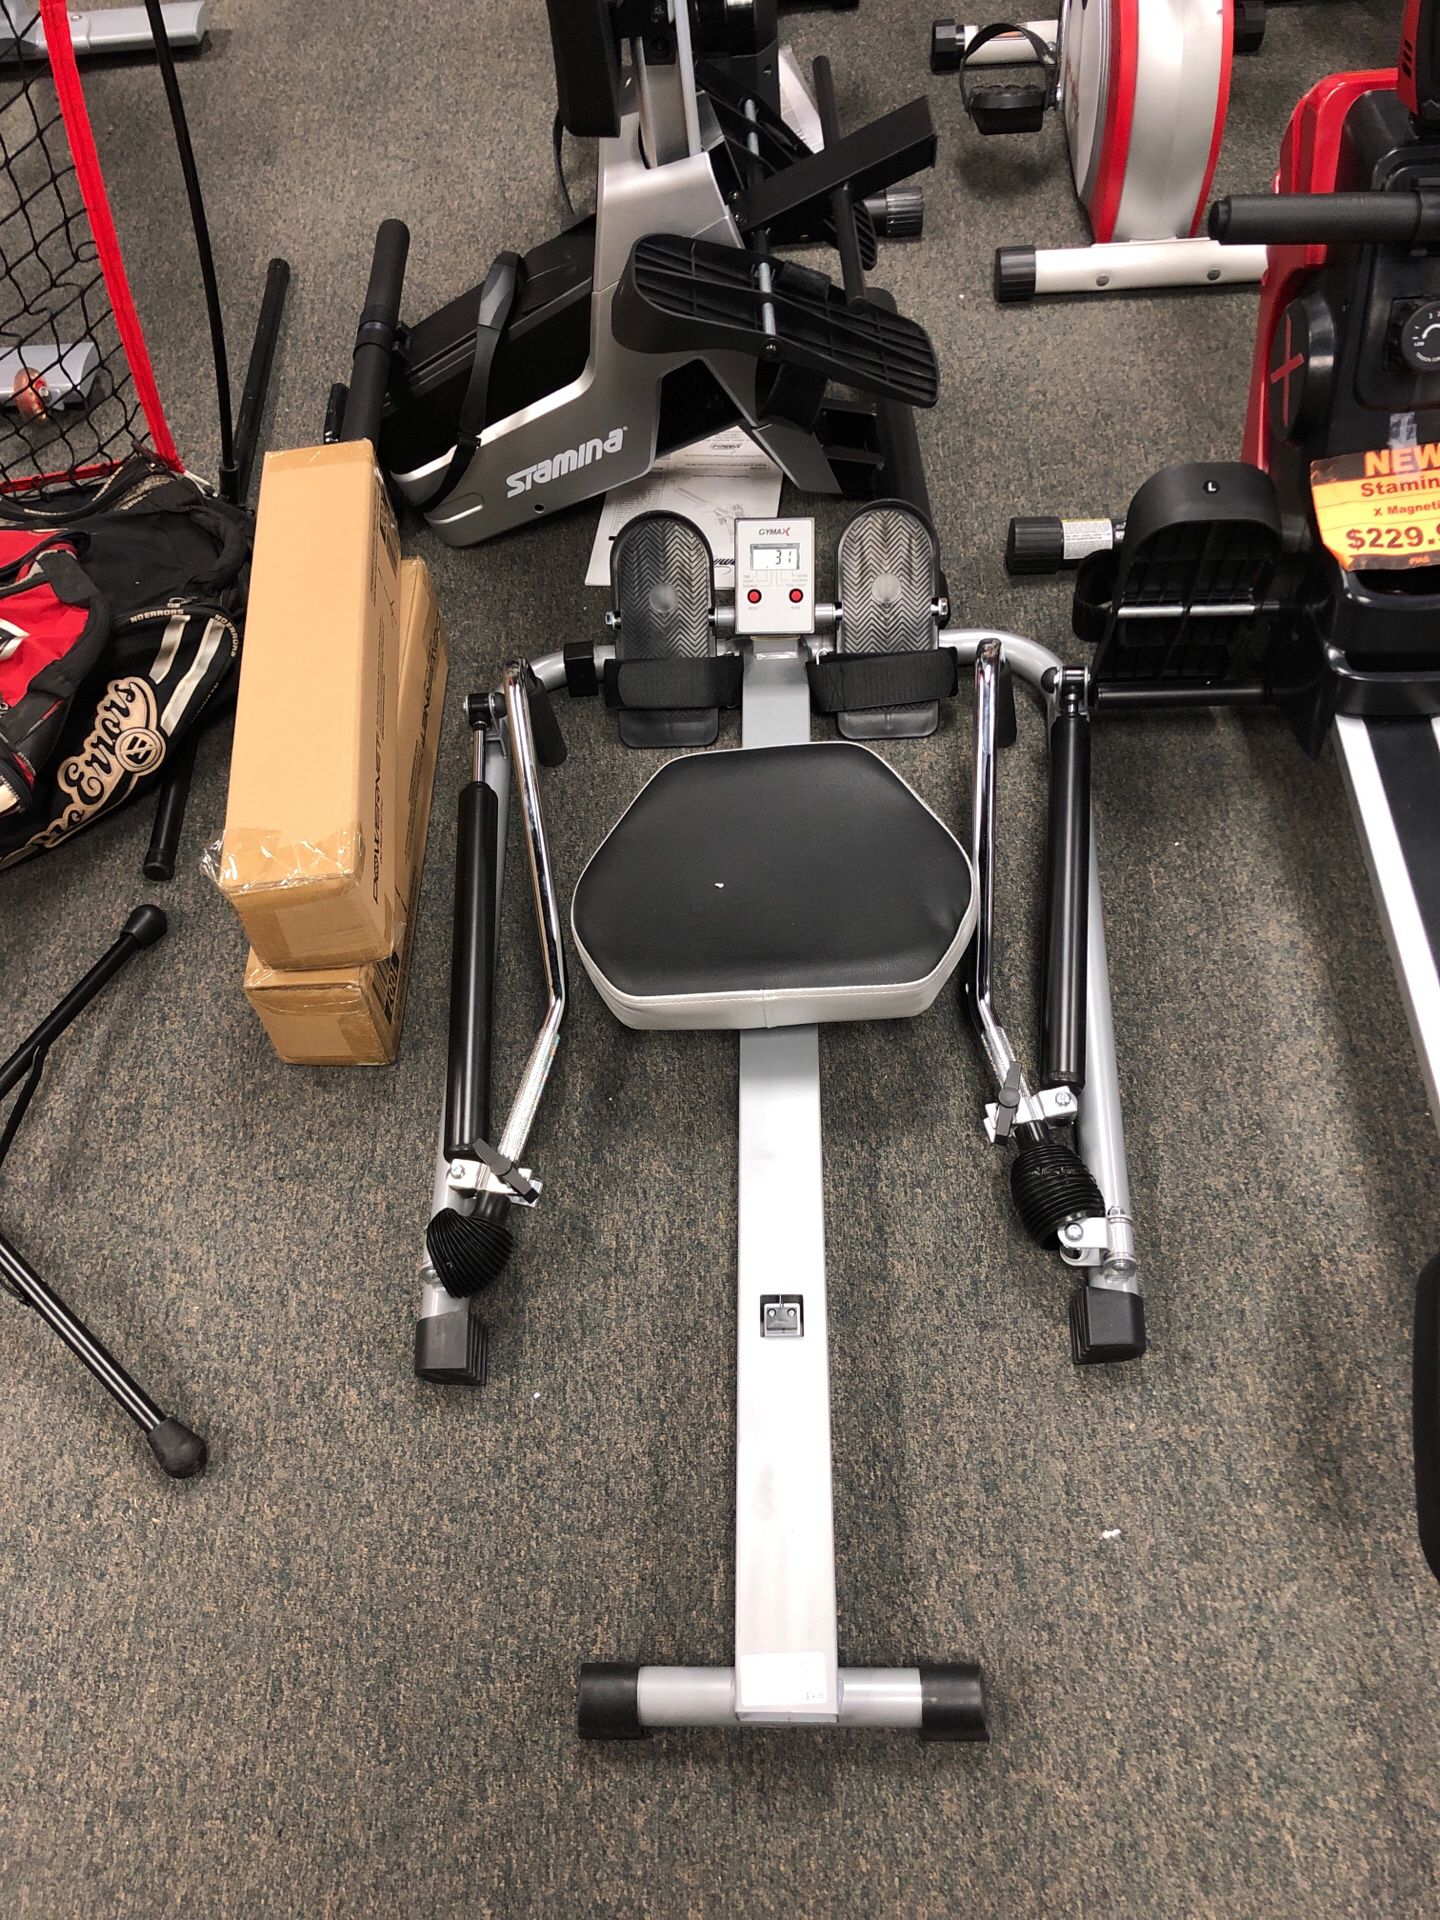 Gymax rowing machine